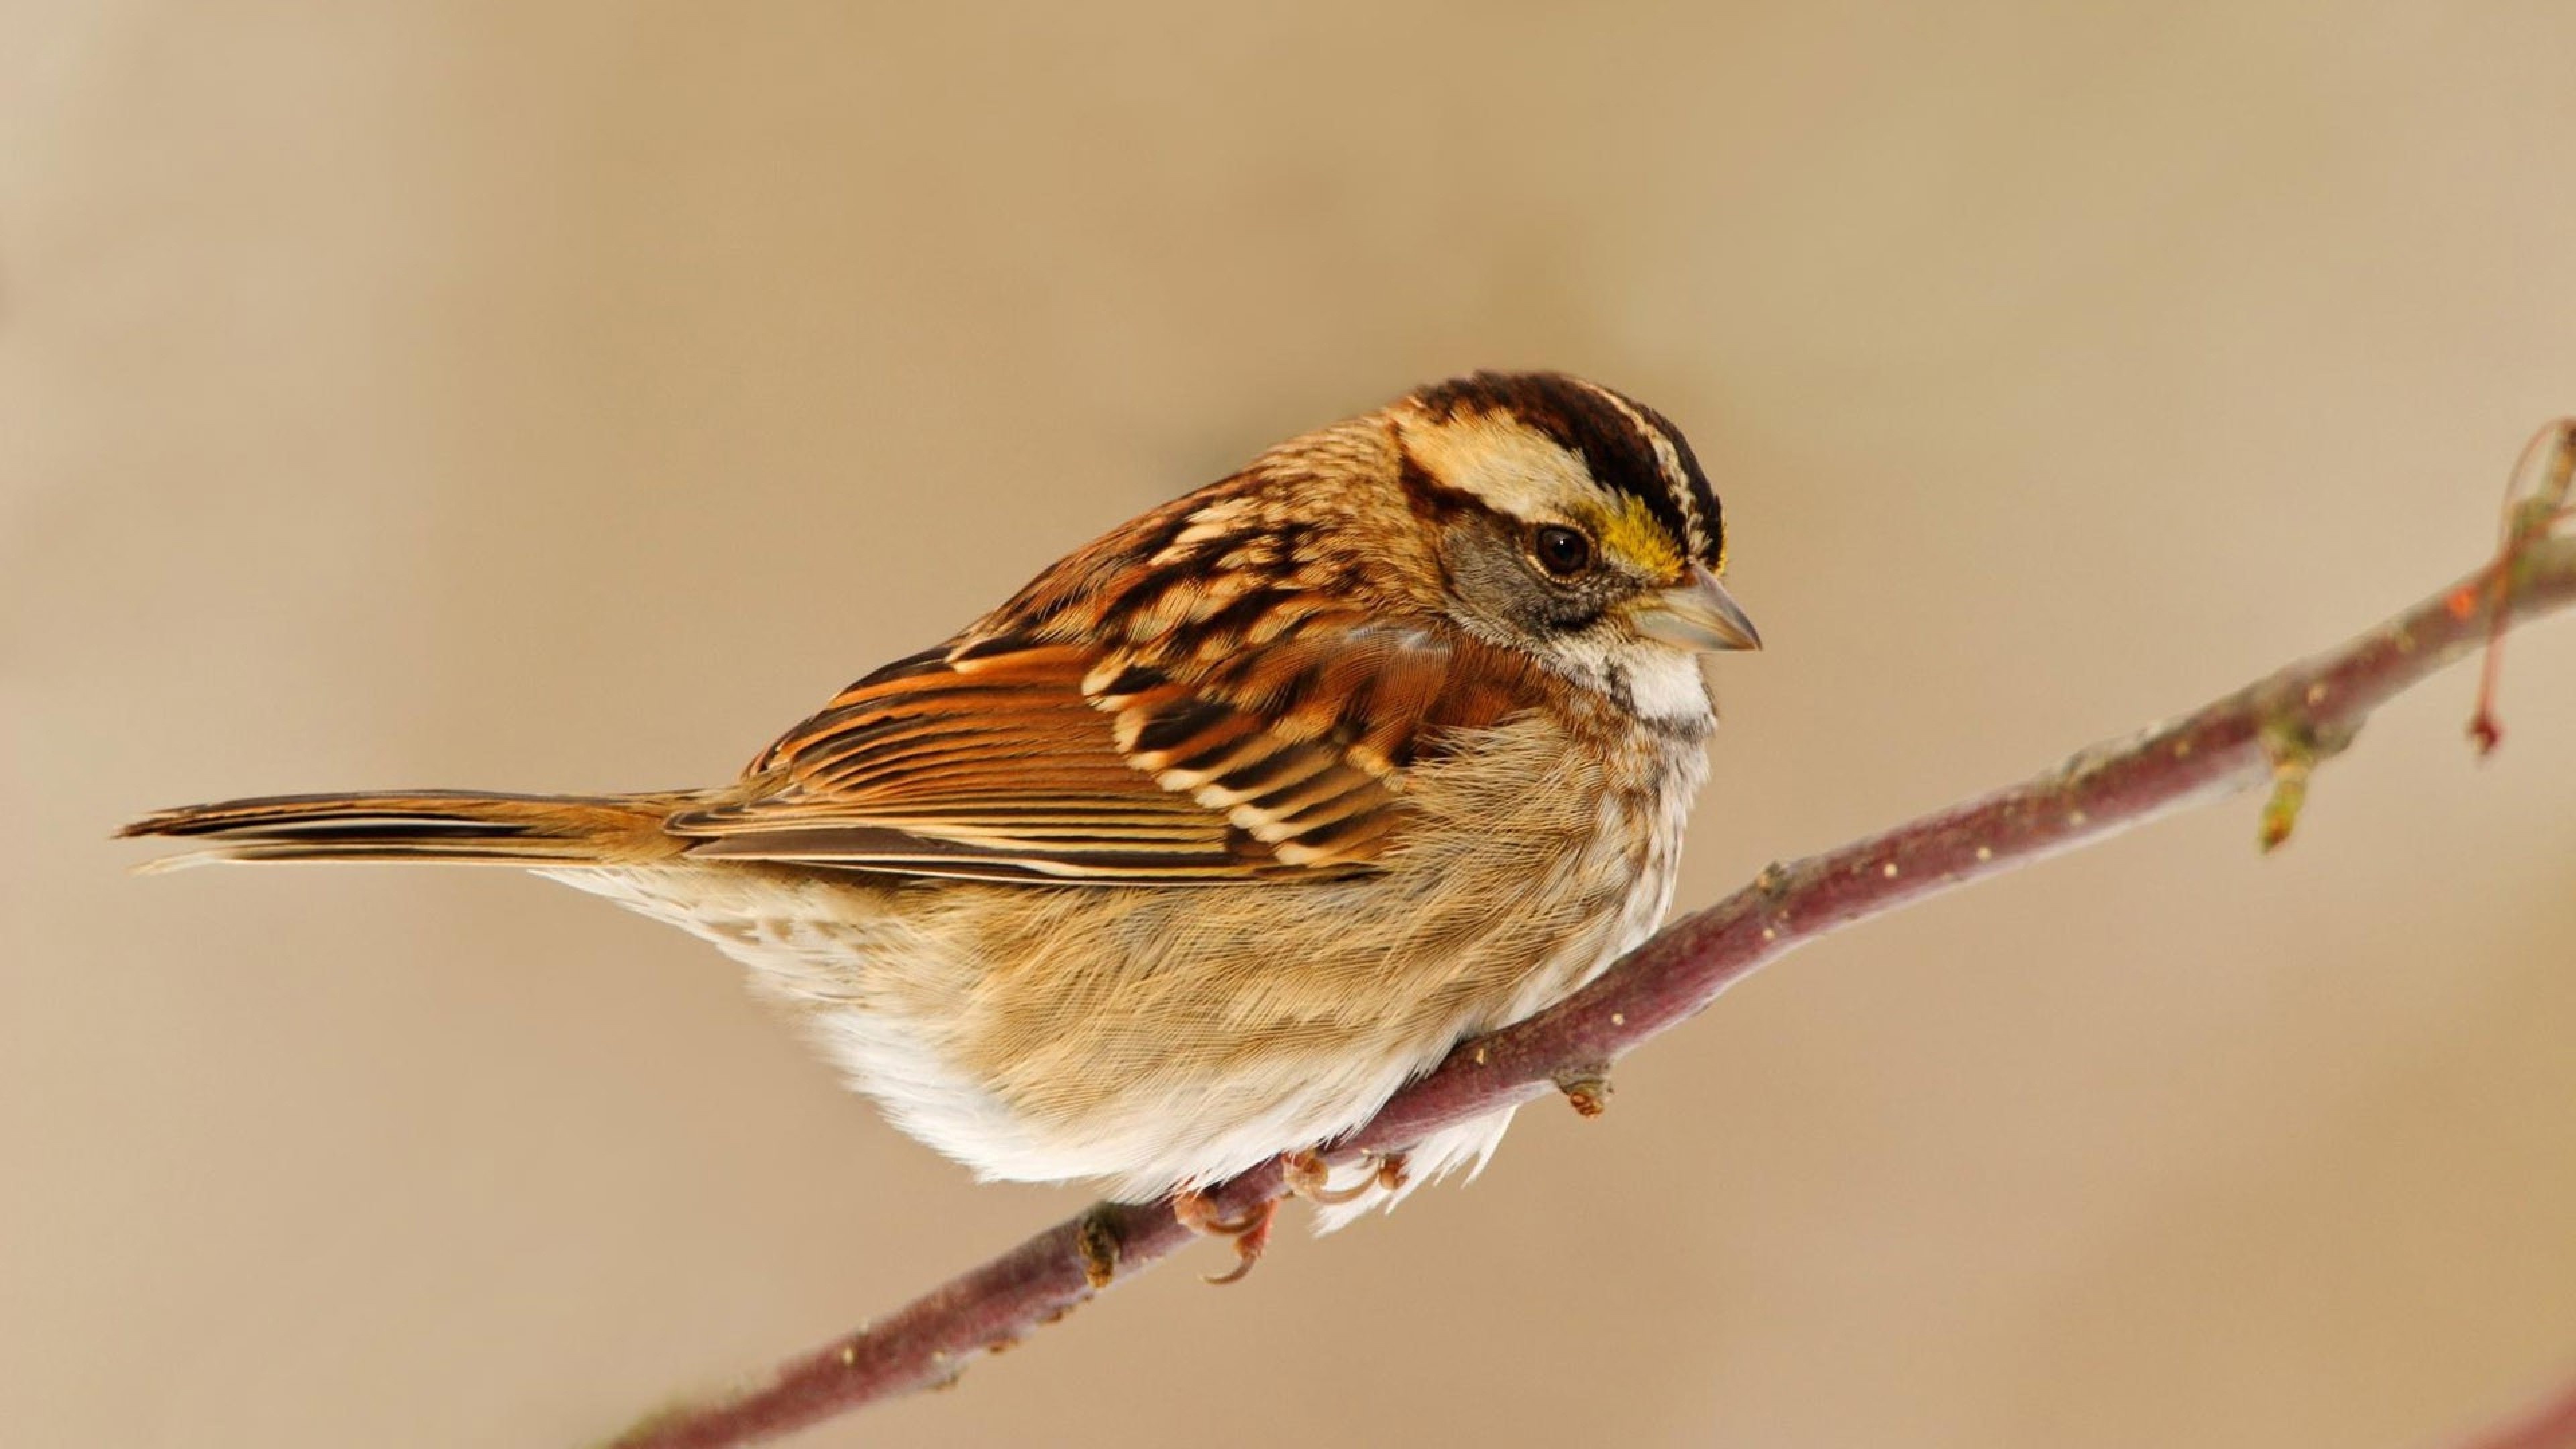 Sparrow, Feathered beauty, Bird in flight, Nature's charm, 3840x2160 4K Desktop